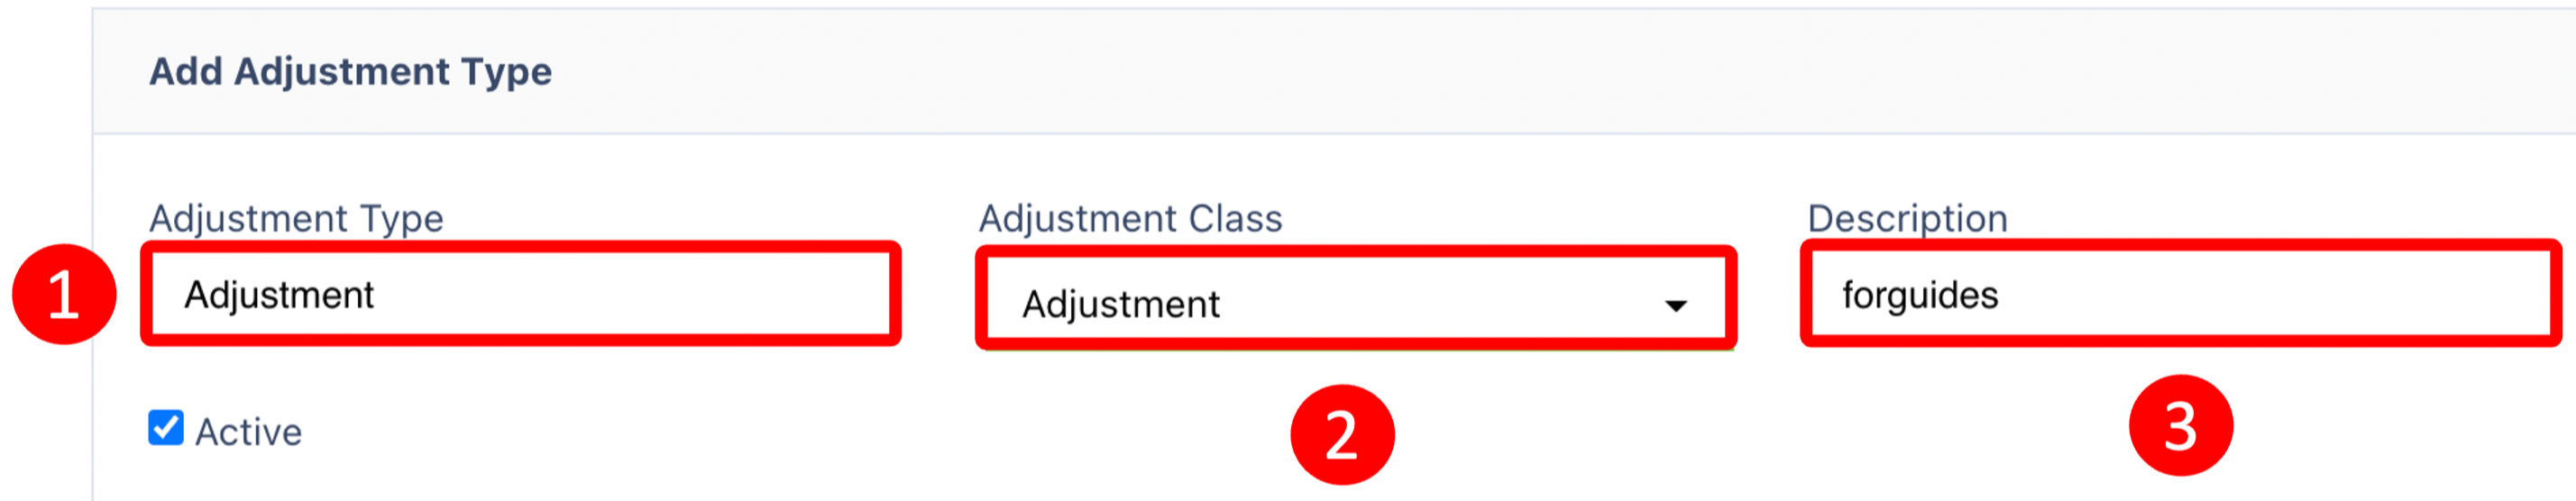 adjustment type